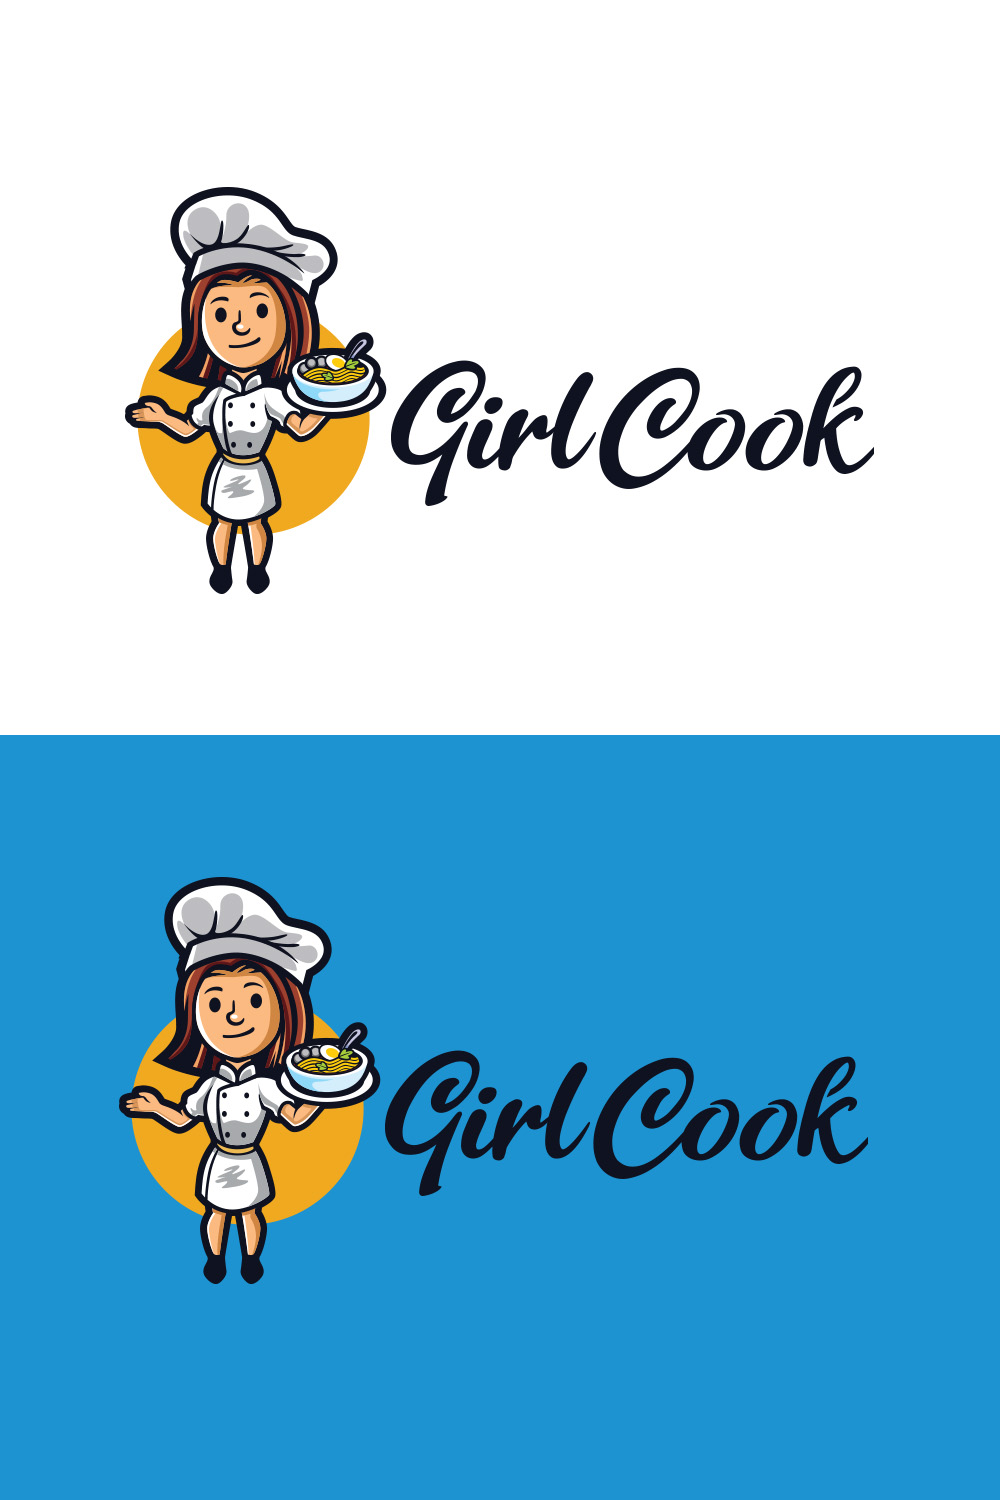 Girl Cook Mascot Logo Design pinterest preview image.